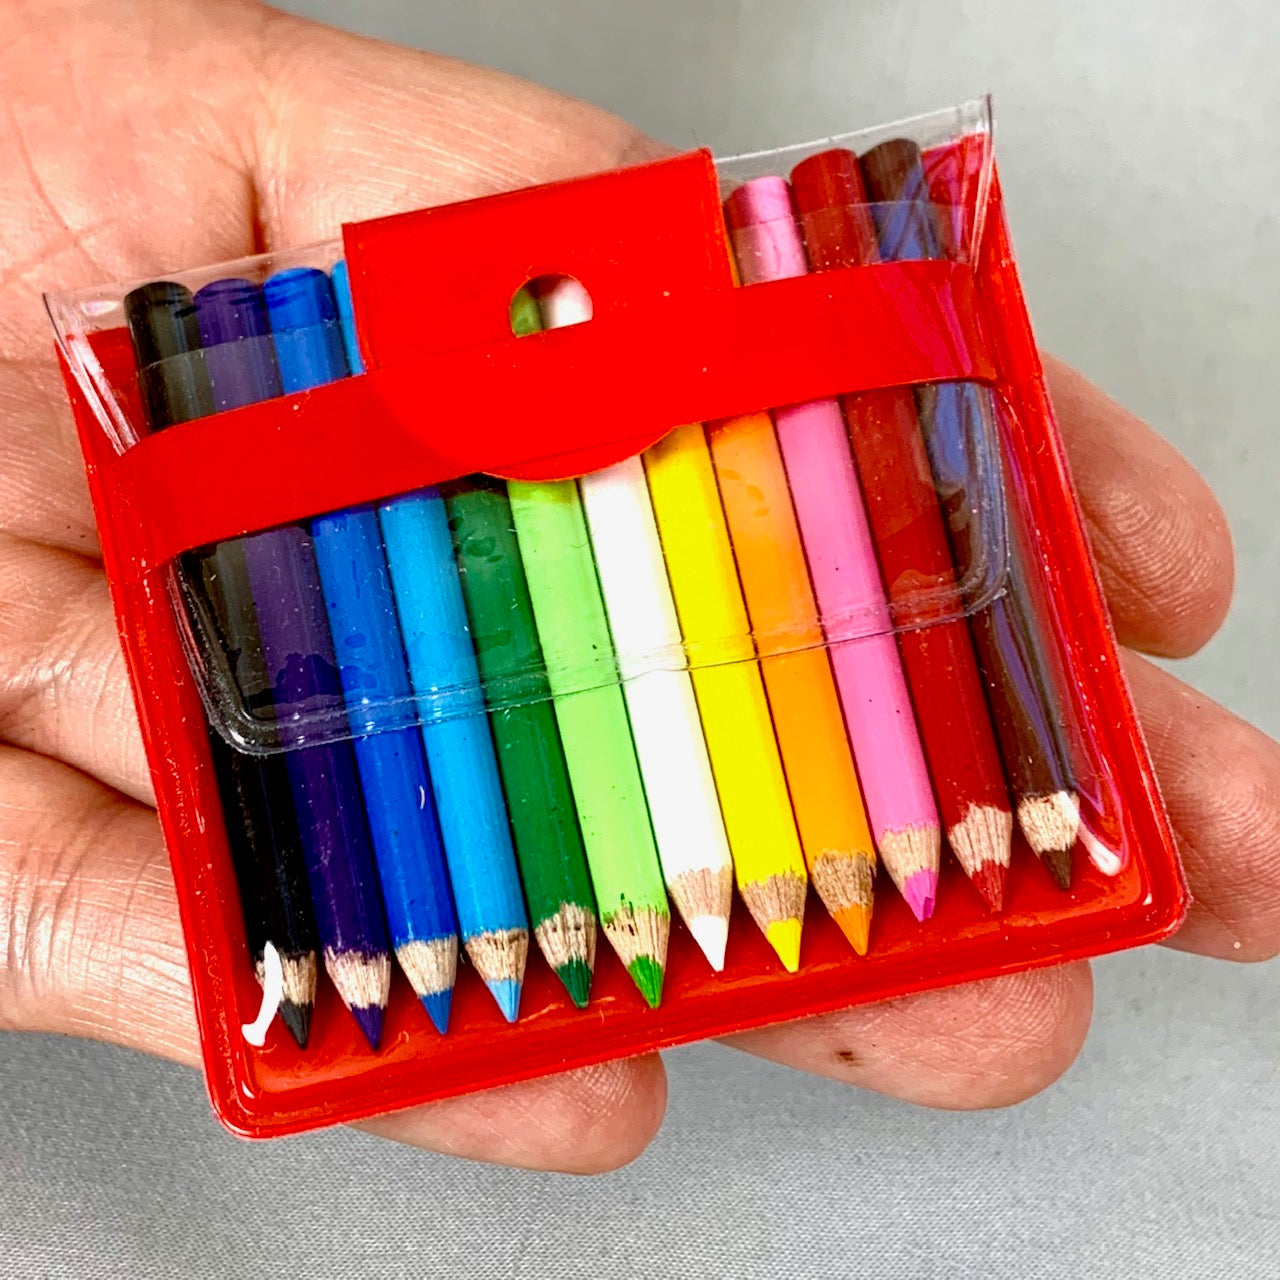 Lukka Chhupi Art Pouch Colour Pencils for Kids (A Set of 12 Colour Pencils,  1 Colouring book, 1 Pouch) - Art Pouch Colour Pencils for Kids (A Set of 12  Colour Pencils